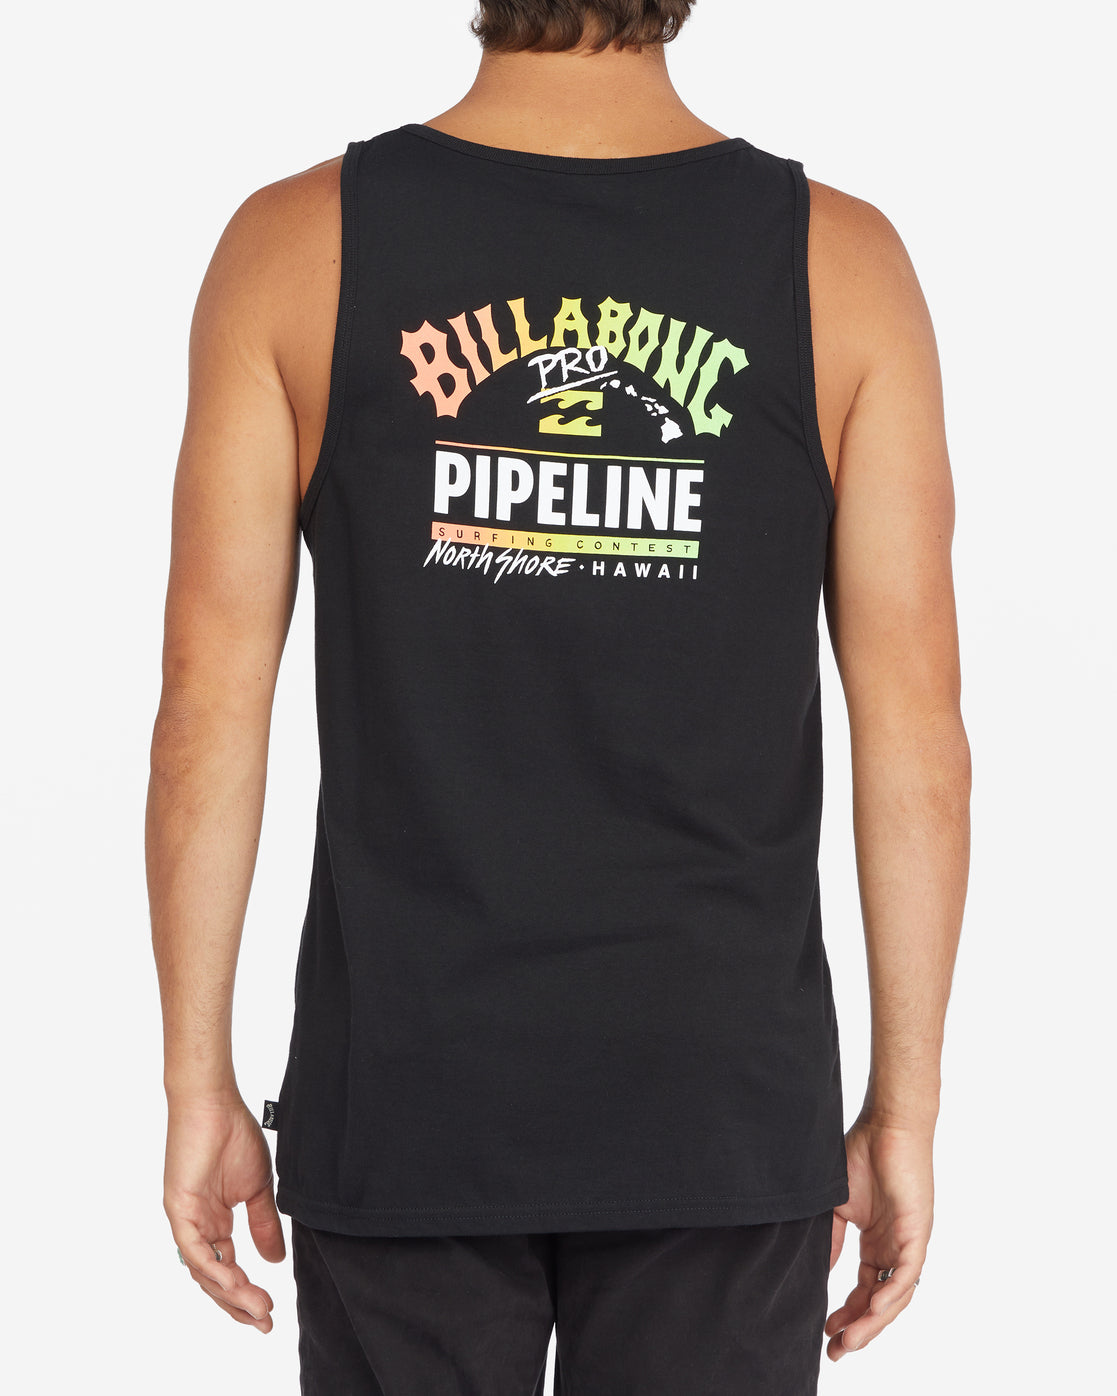 Débardeur Billabong Pipeline Black